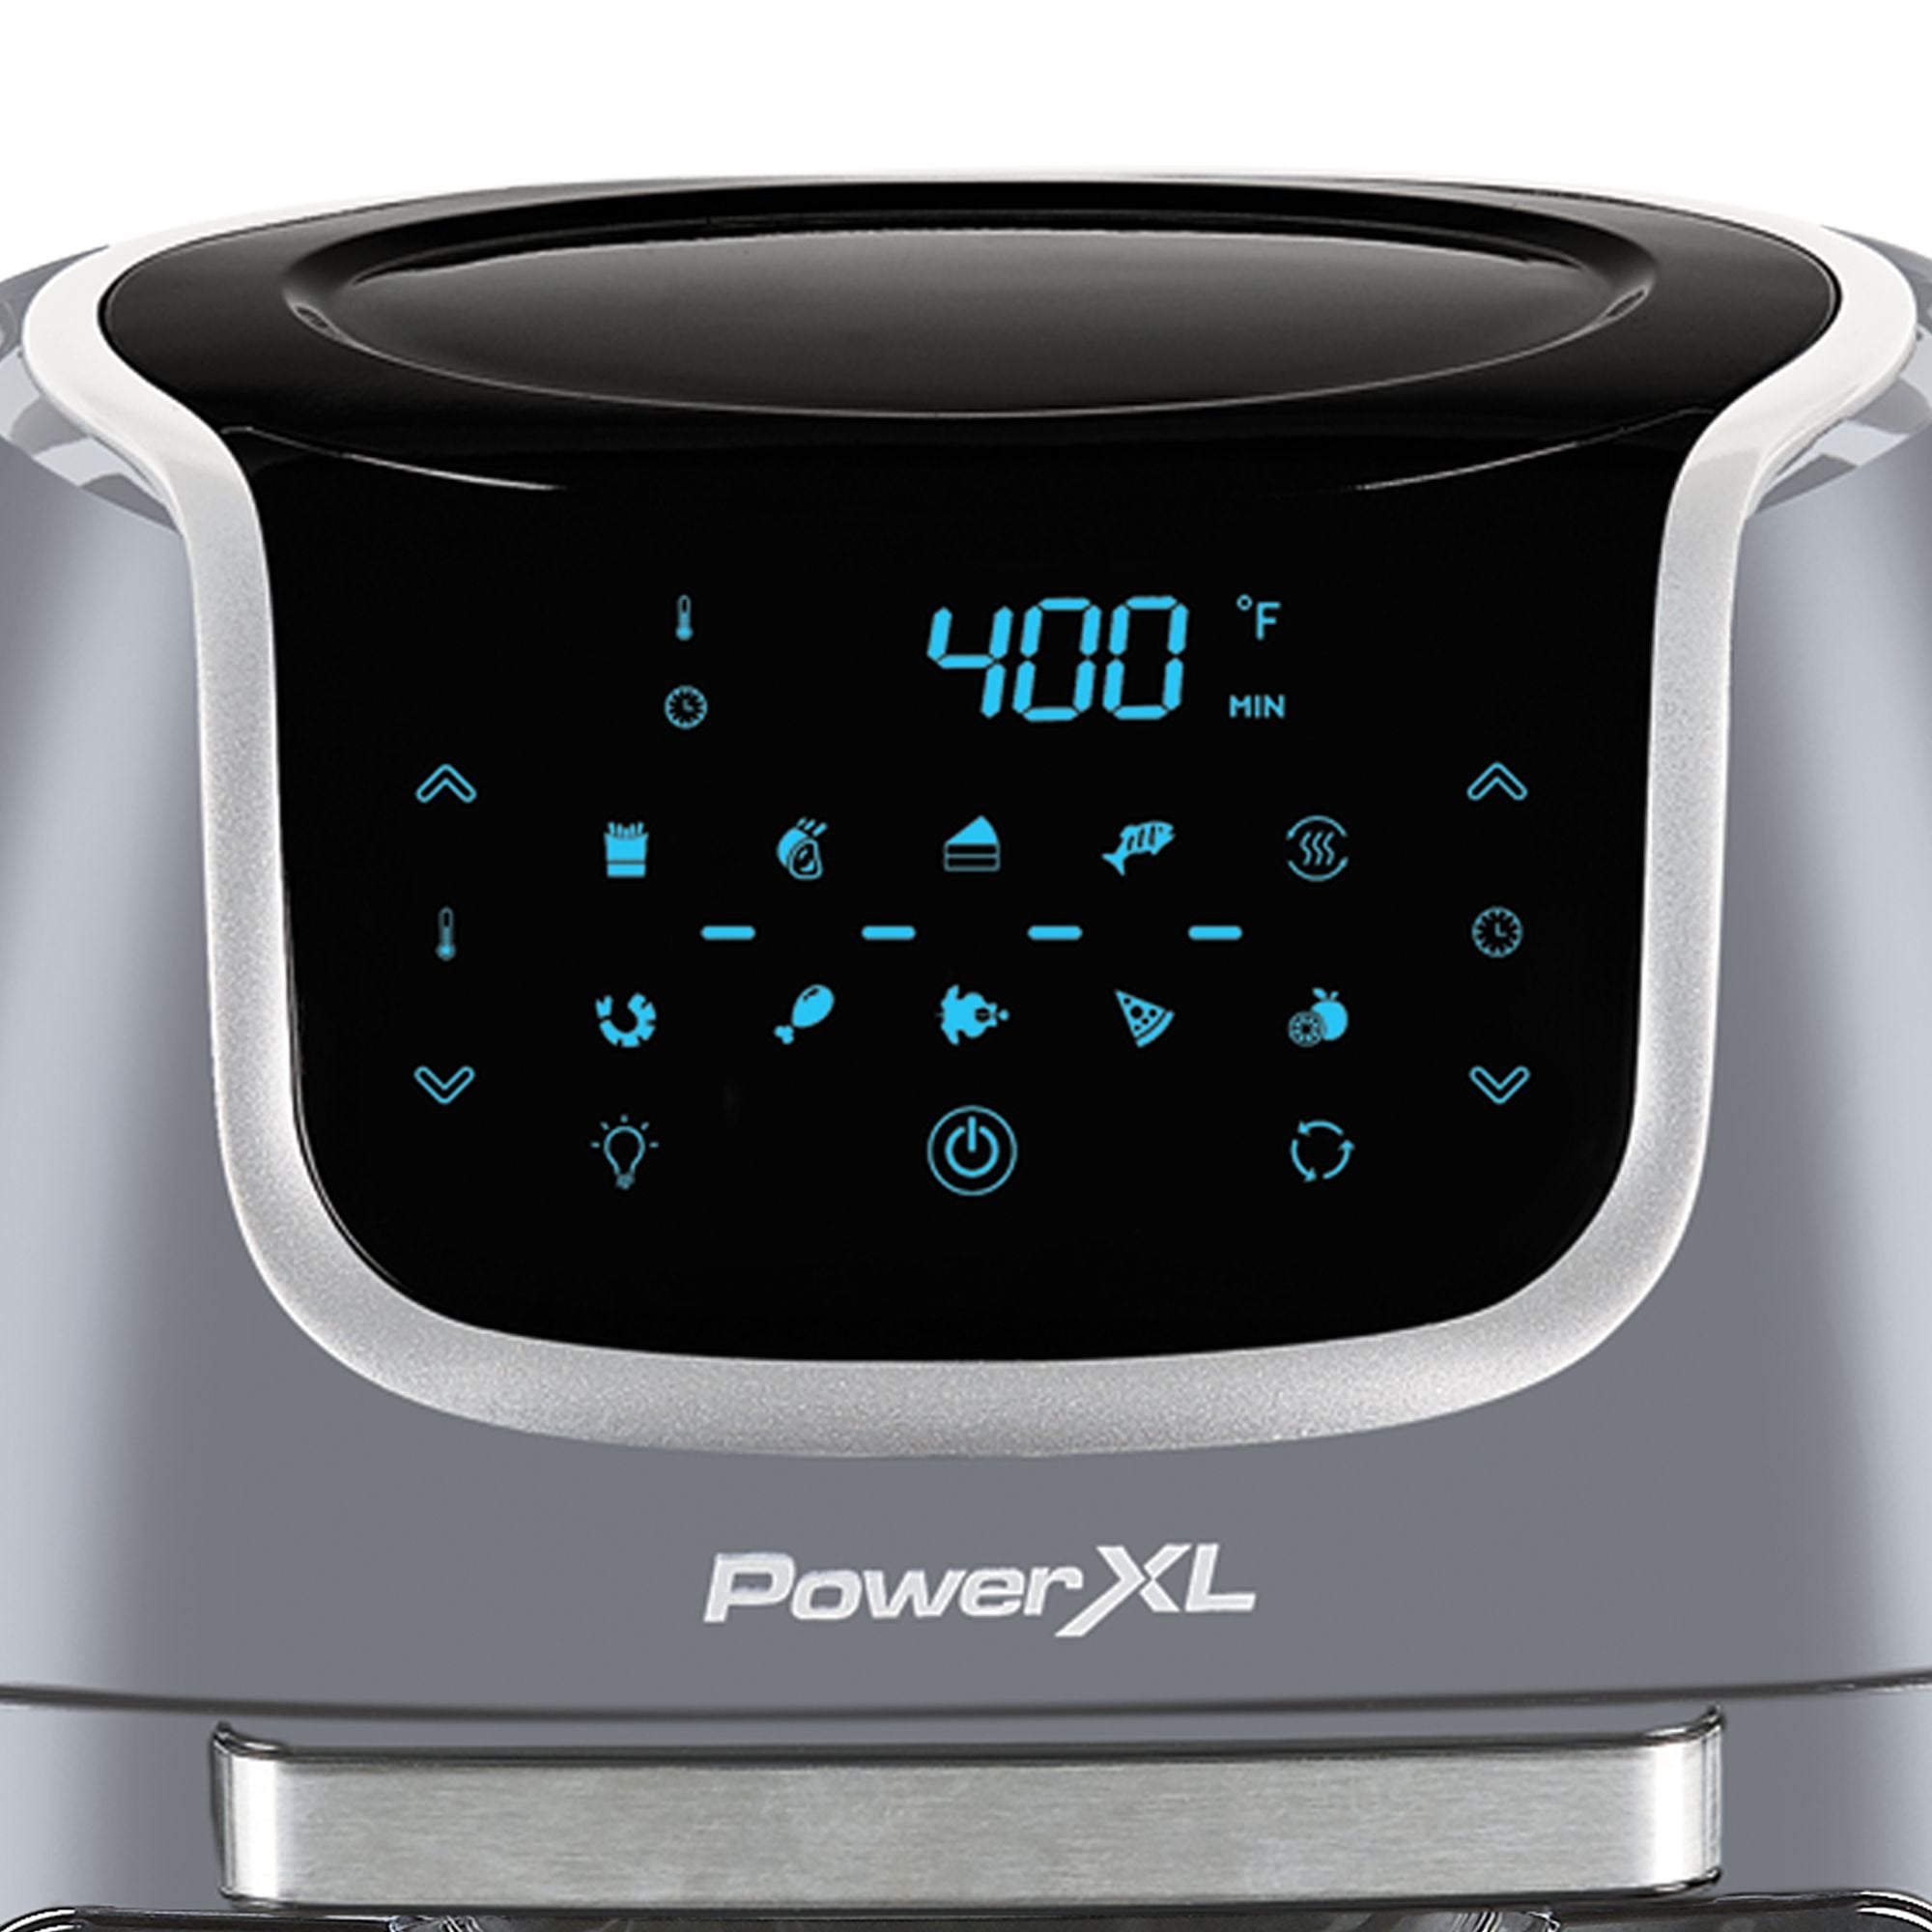 Powerxl Vortex Air Fryer Pro plus 10 Quart Capacity, Black, 1700 Watts